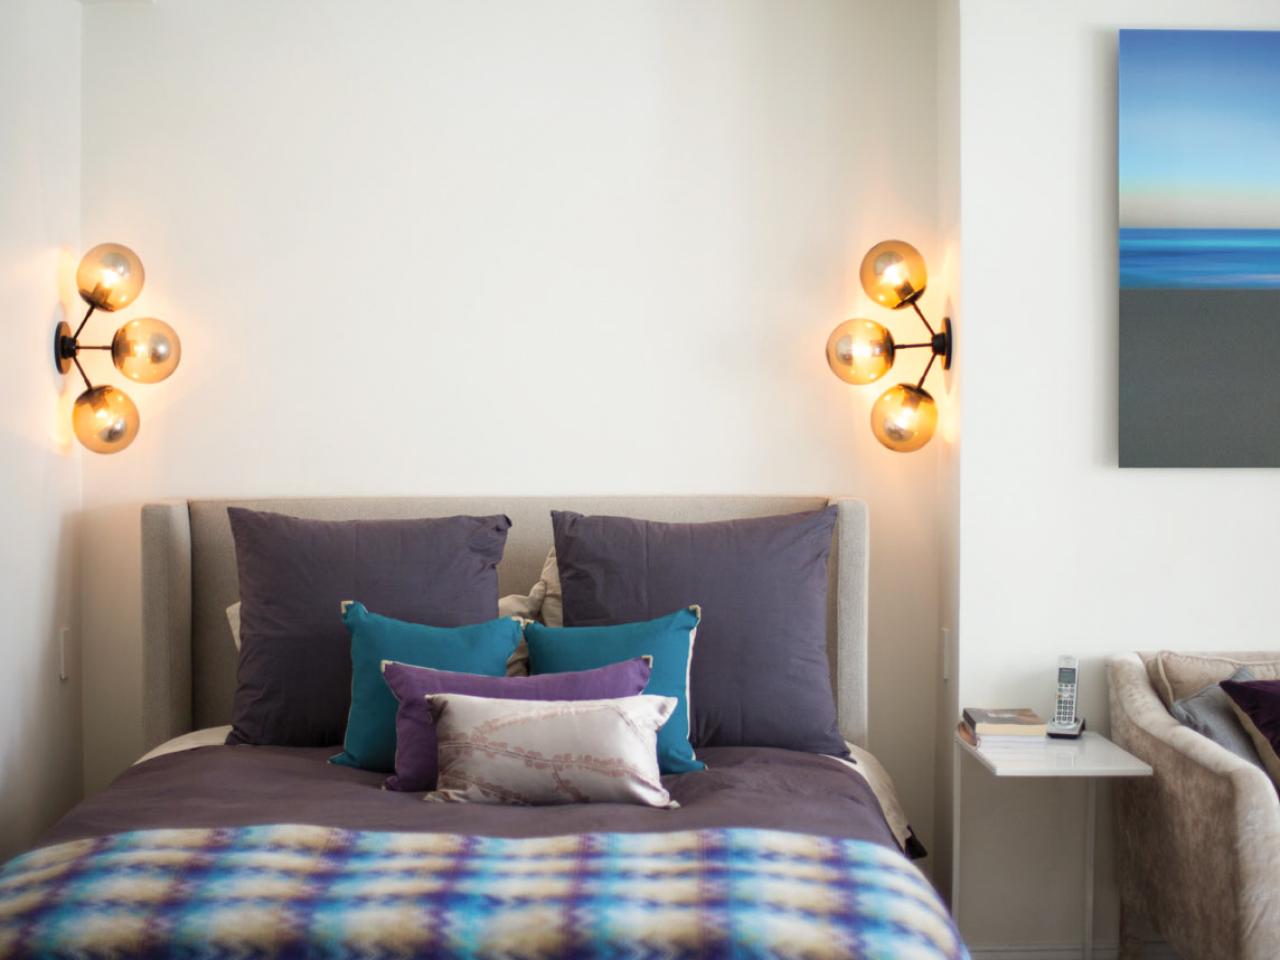 14 Ideas For Small Bedroom Decor Hgtv S Decorating Design Blog Hgtv,Different Letter Designs